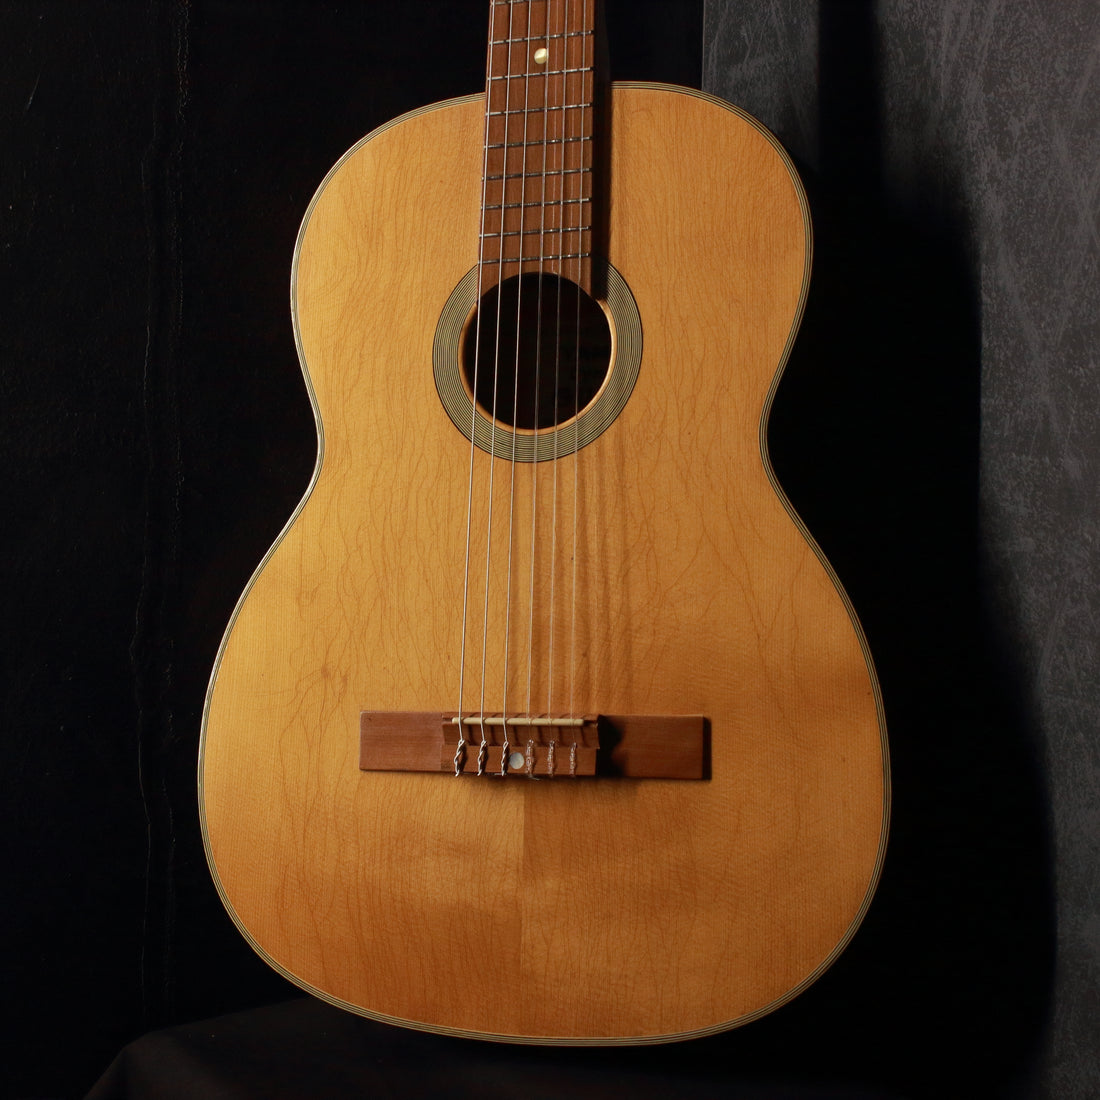 Yamaha Dynamic Guitar No.2 Classical Acoustic c1960